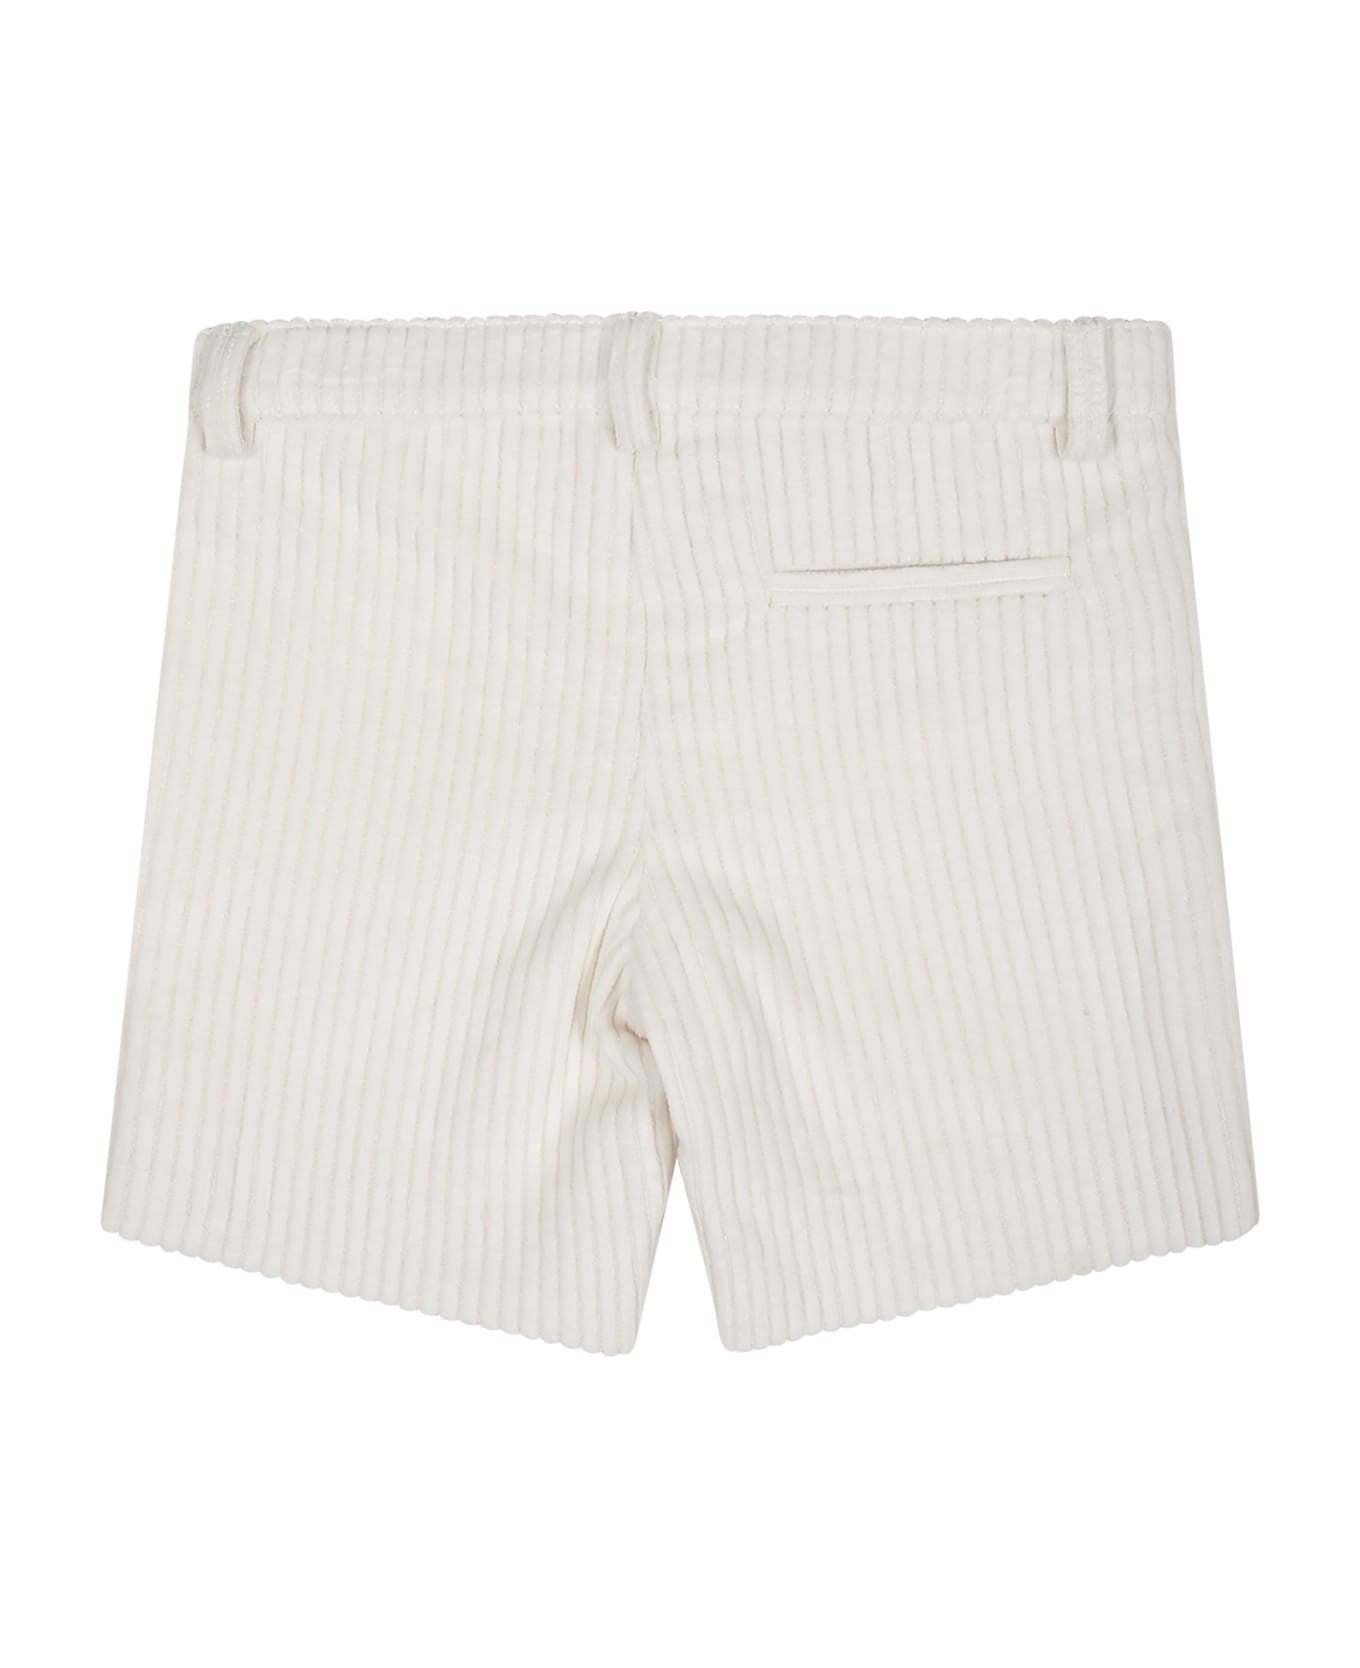 Little Bear White Shorts For Baby Boy - White ボトムス